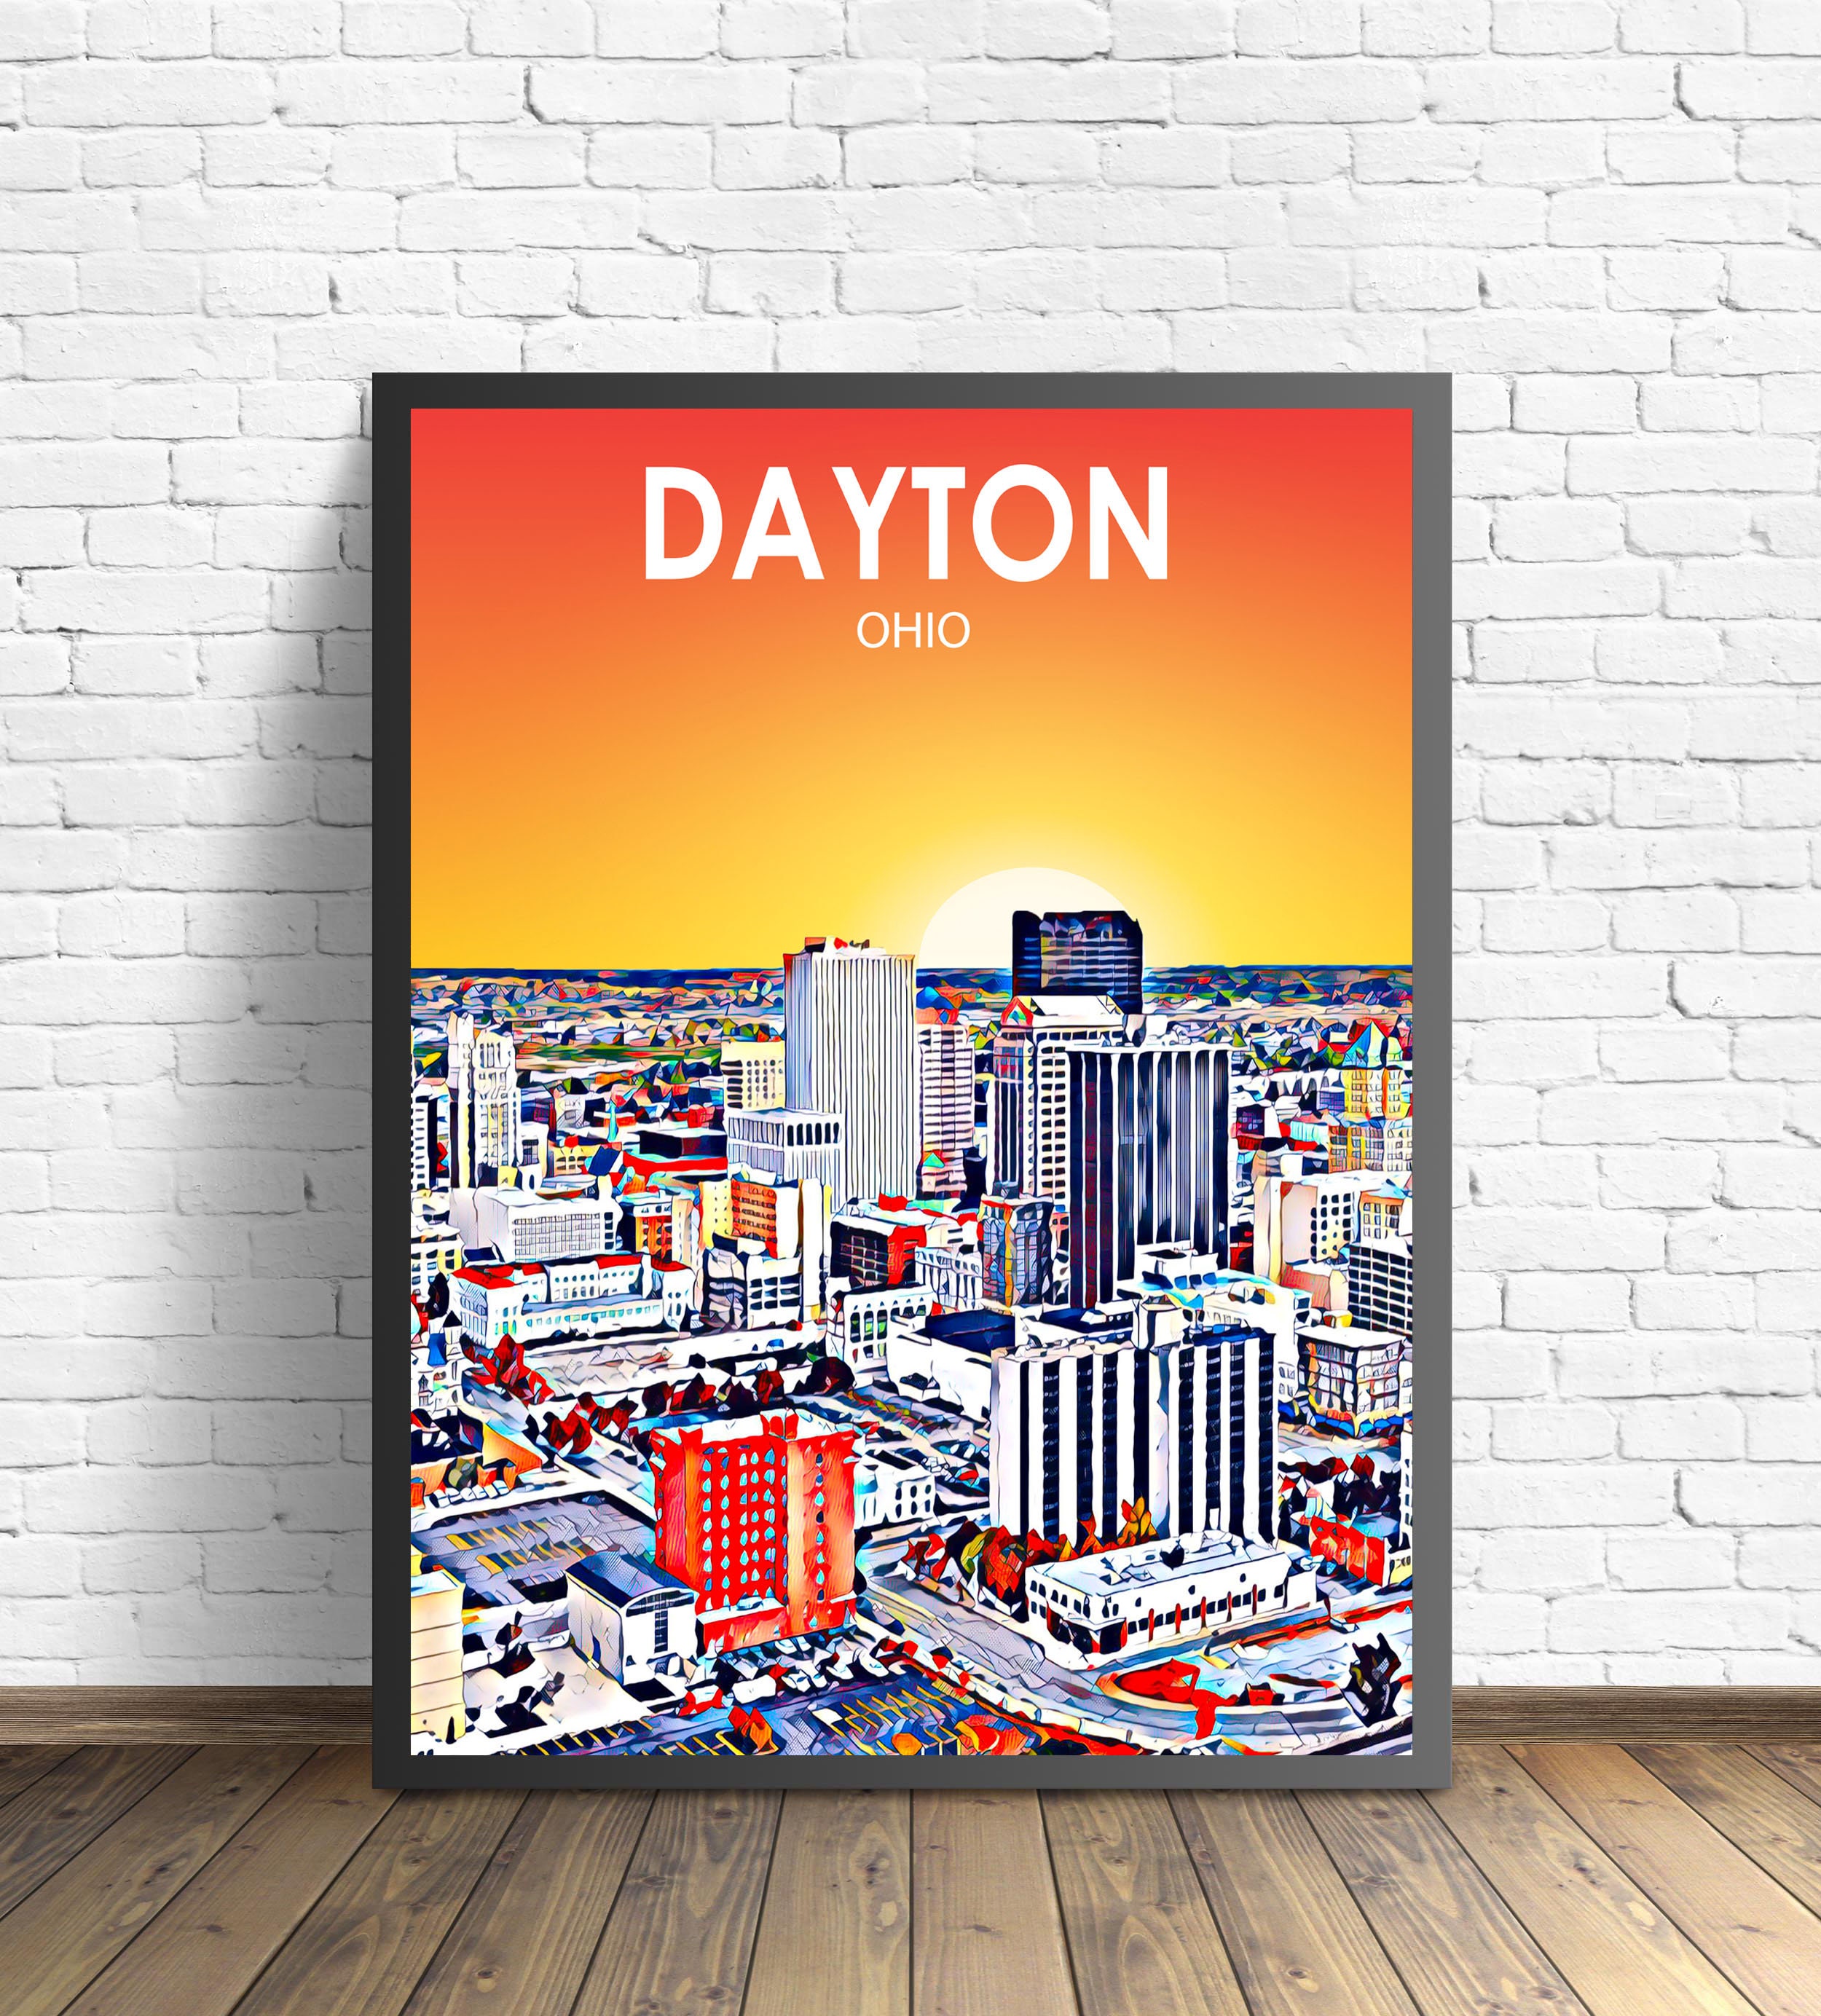 Dayton Ohio Art Poster Sunset Landscape Poster Print Dayton